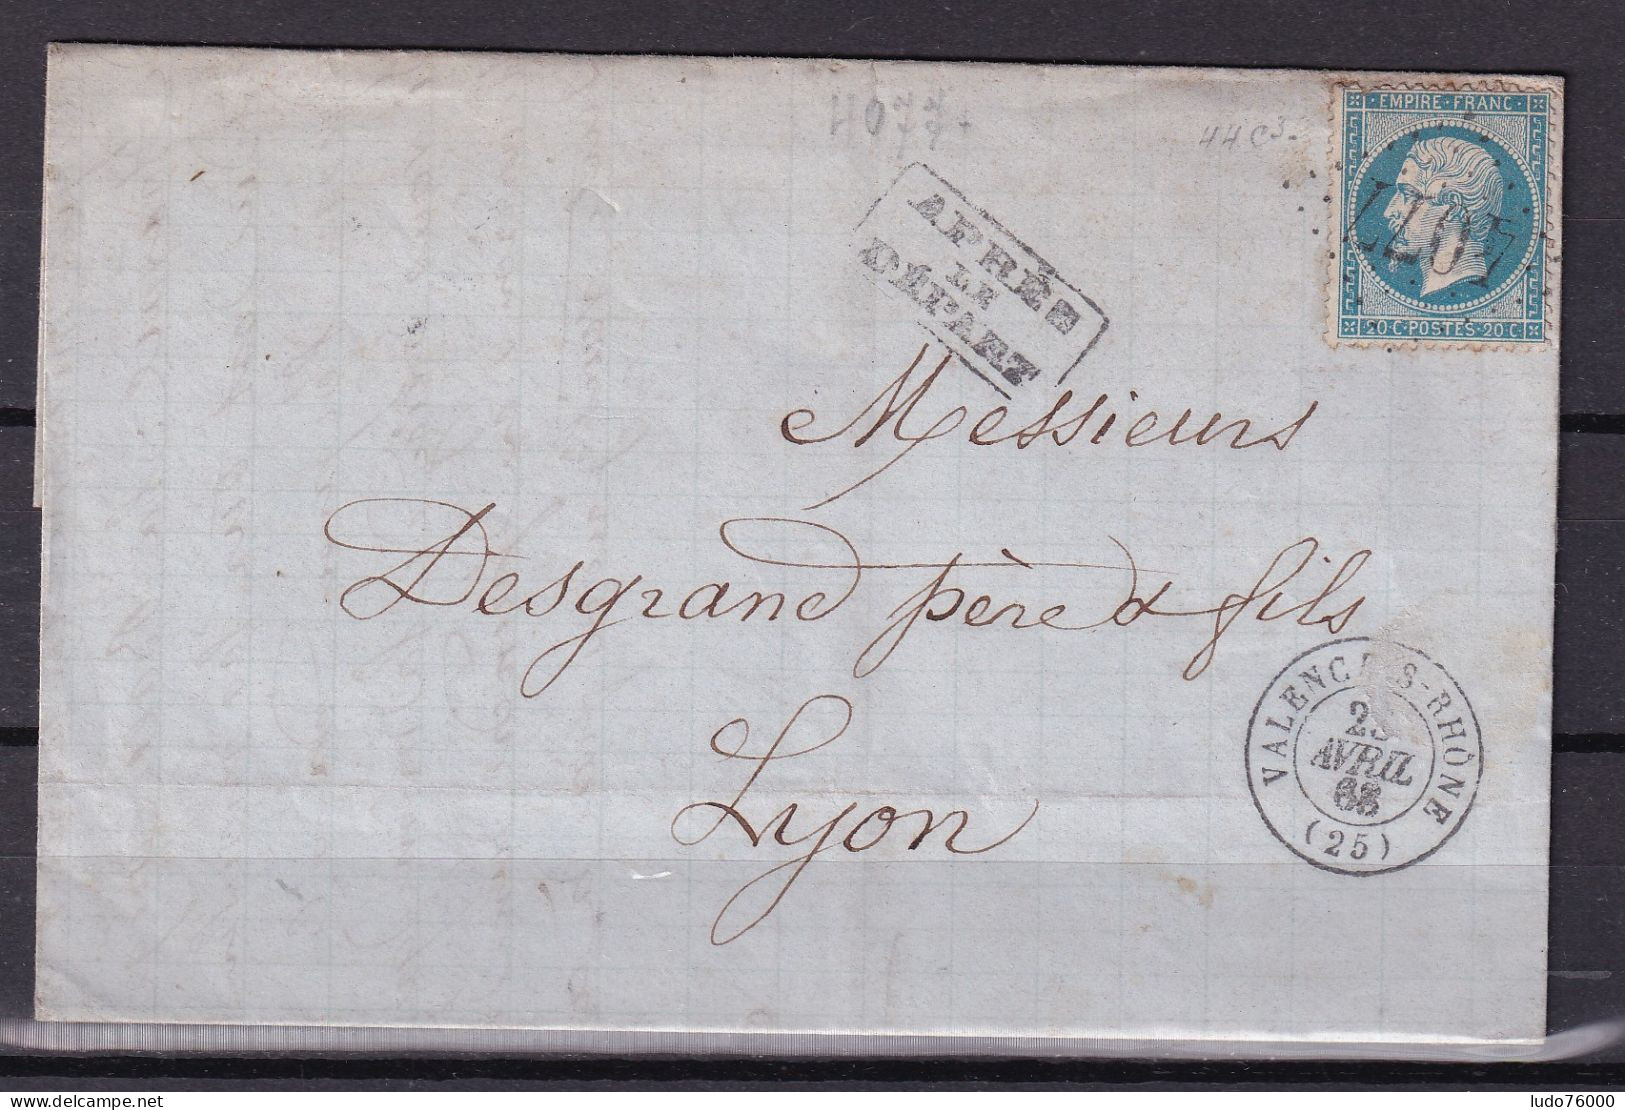 D 806 / NAPOLEON N° 22 SUR LETTRE - 1862 Napoleone III